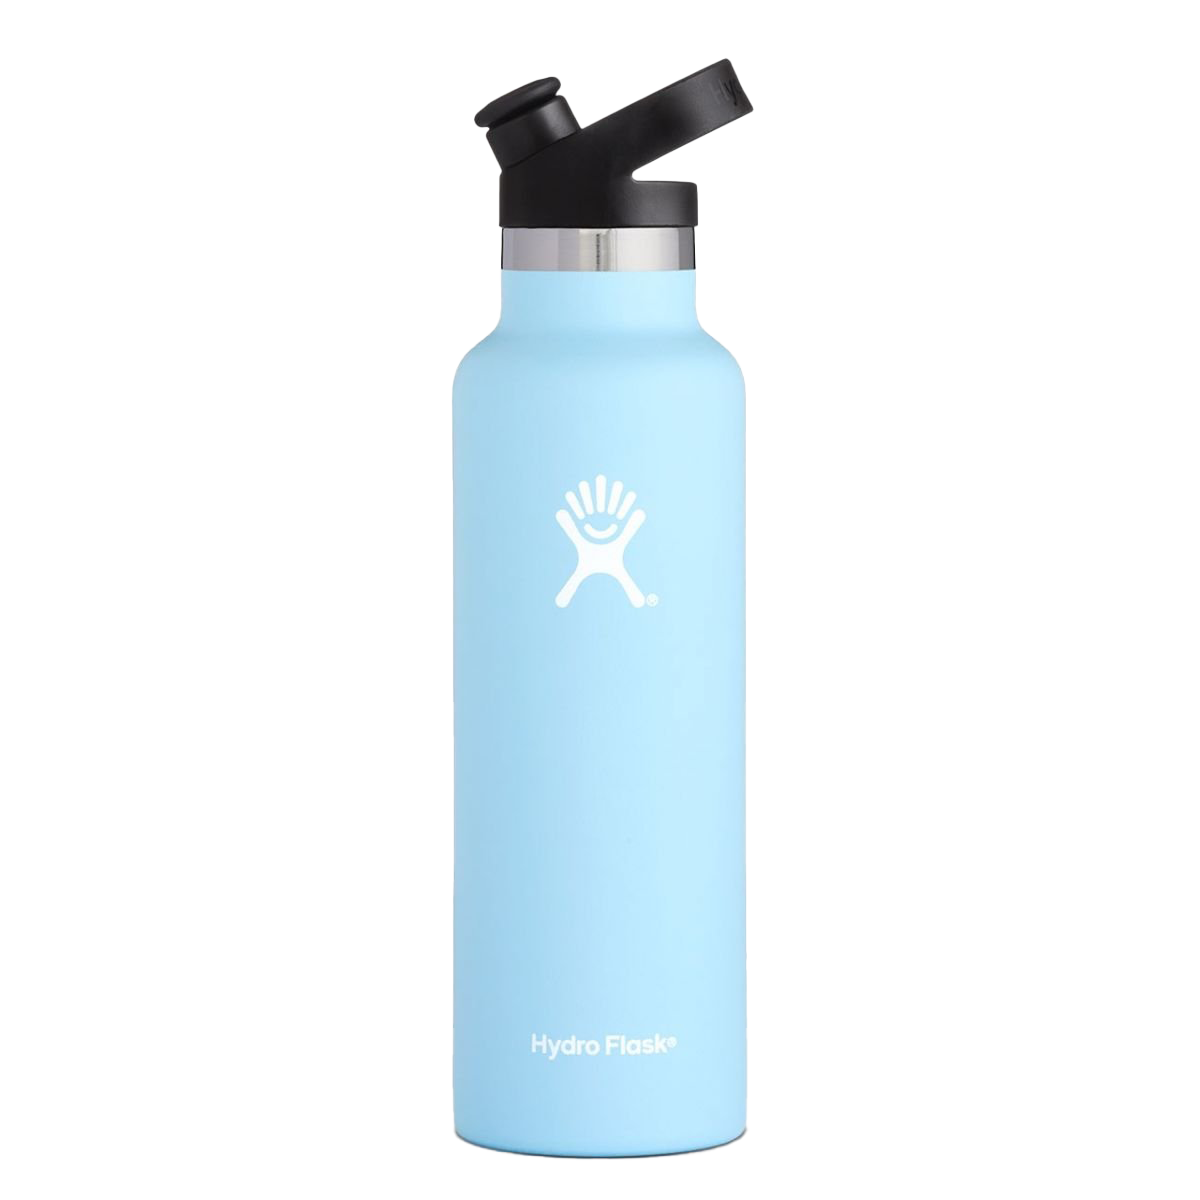 Hydro Flask Bottle PNG Transparent Image